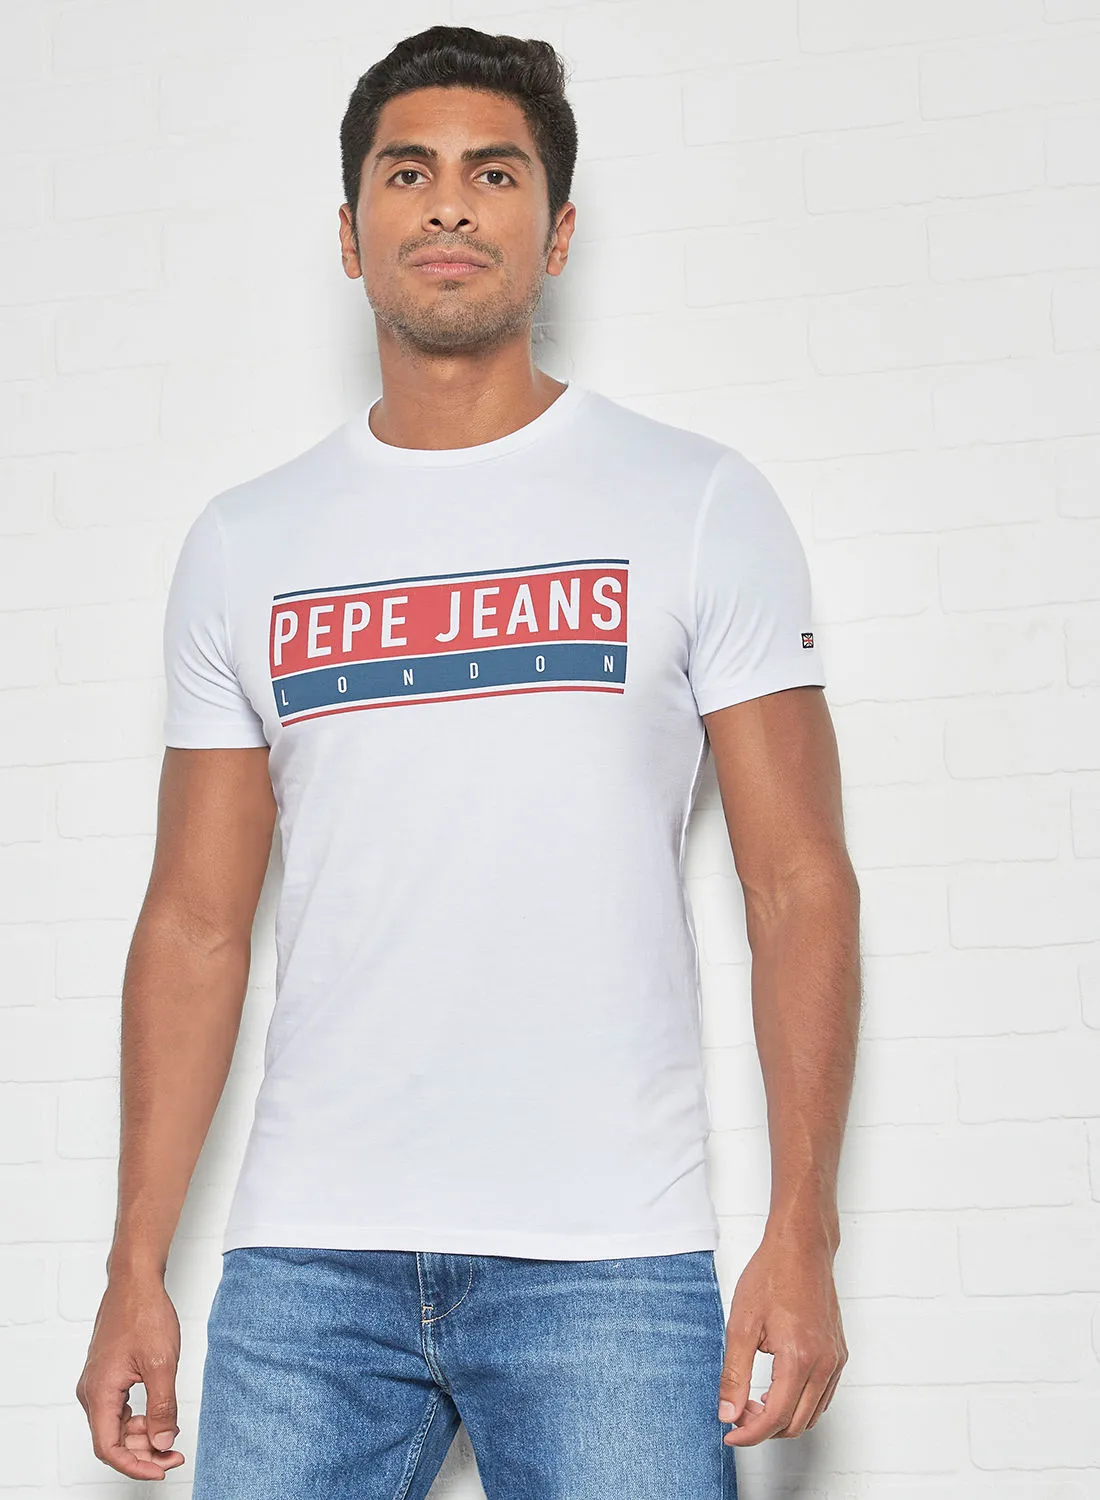 Pepe Jeans LONDON Box Logo T-Shirt White